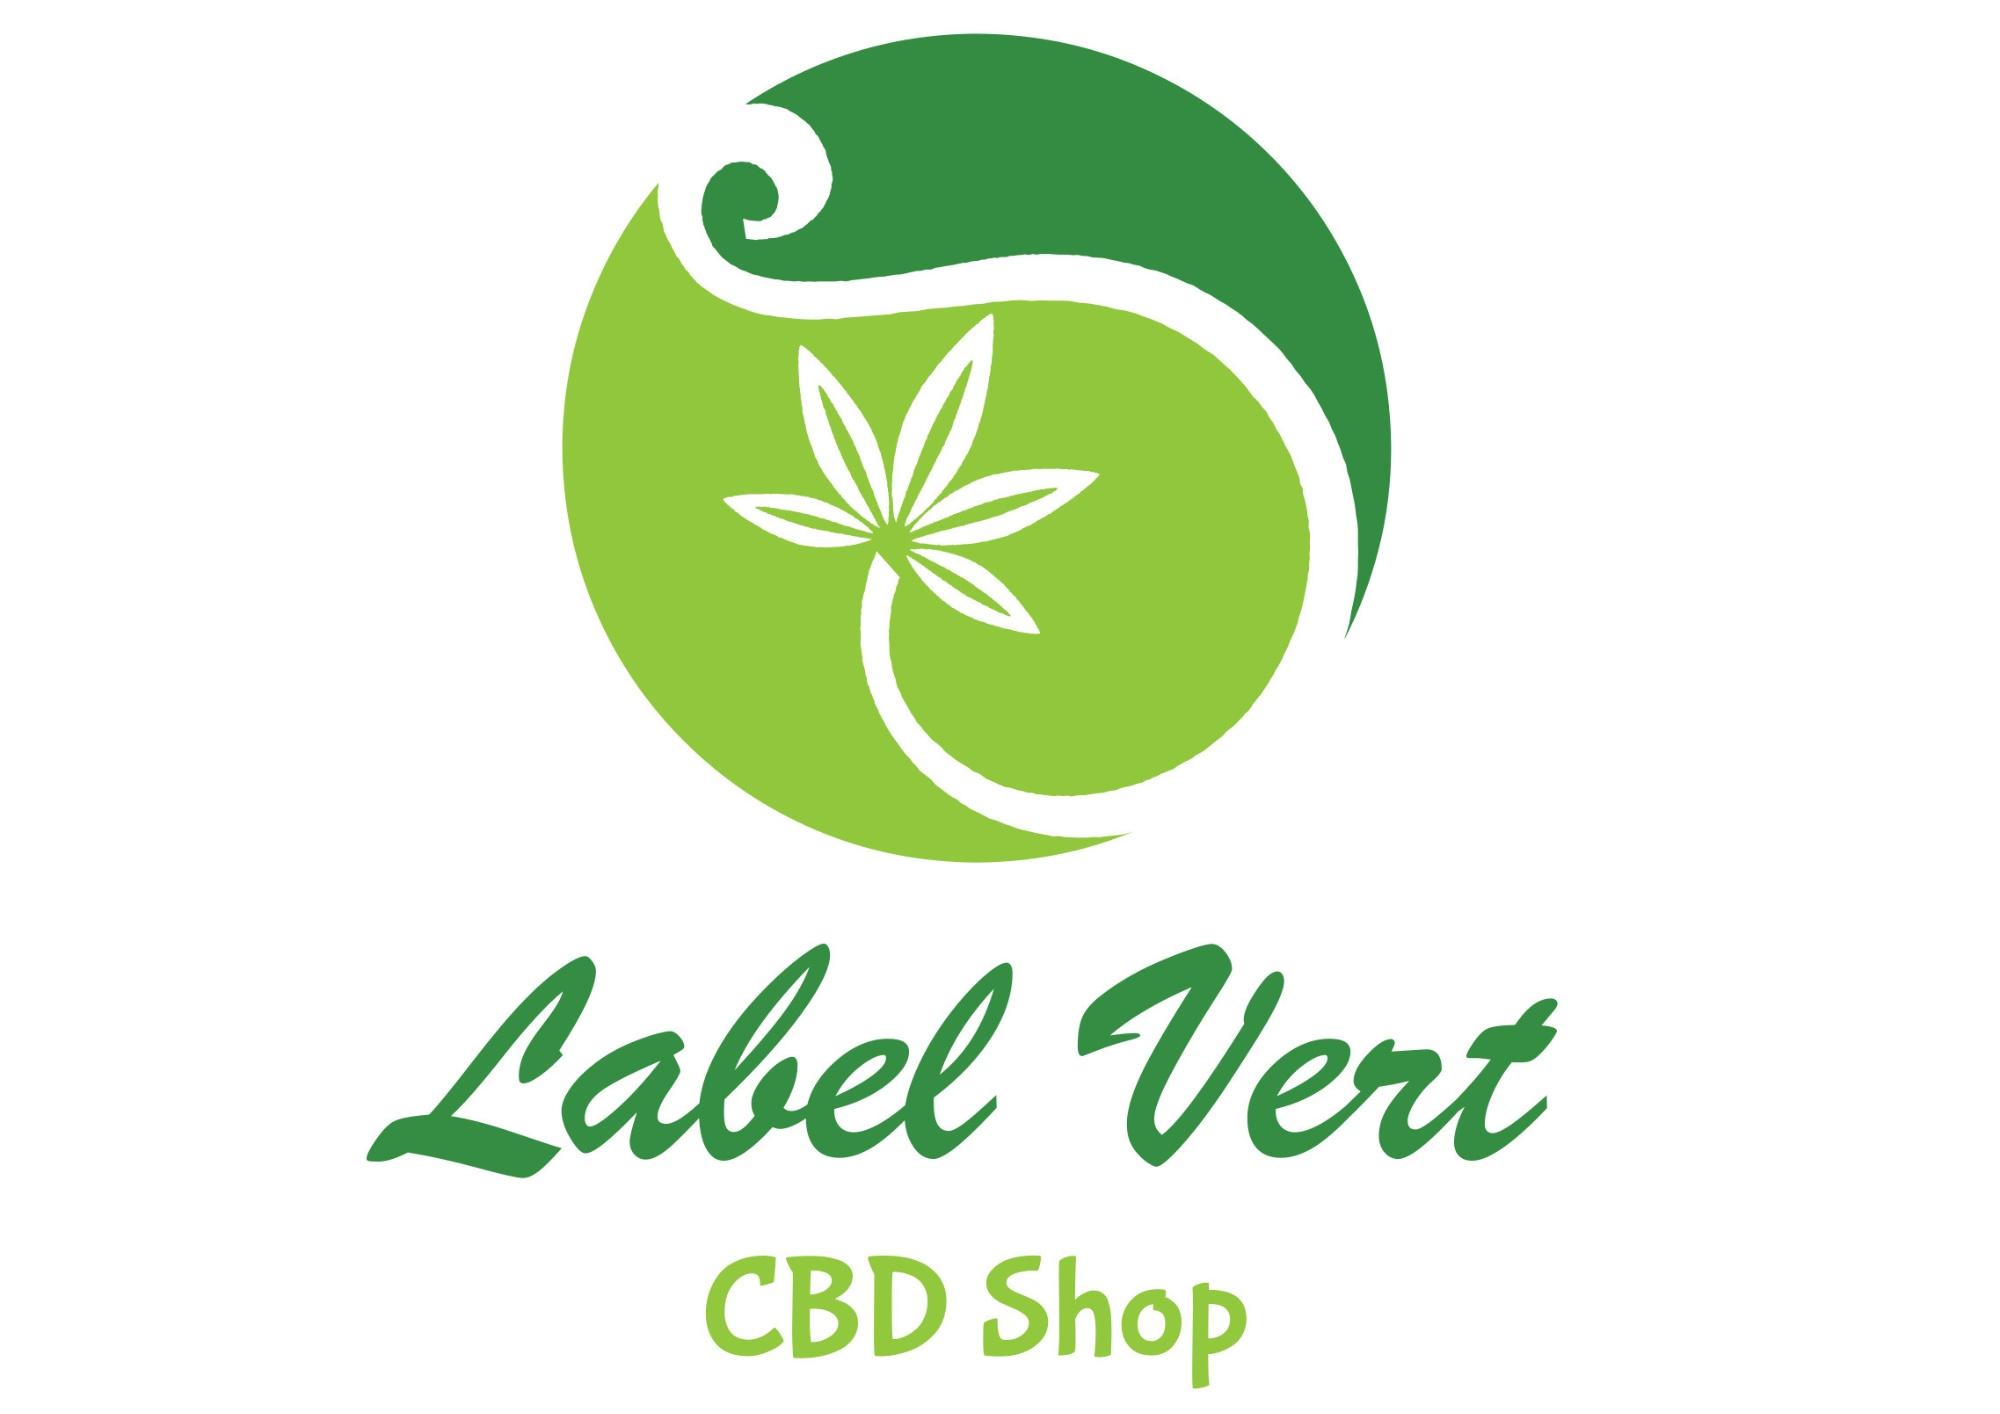 Cbd Label Vert 26 Montélimar